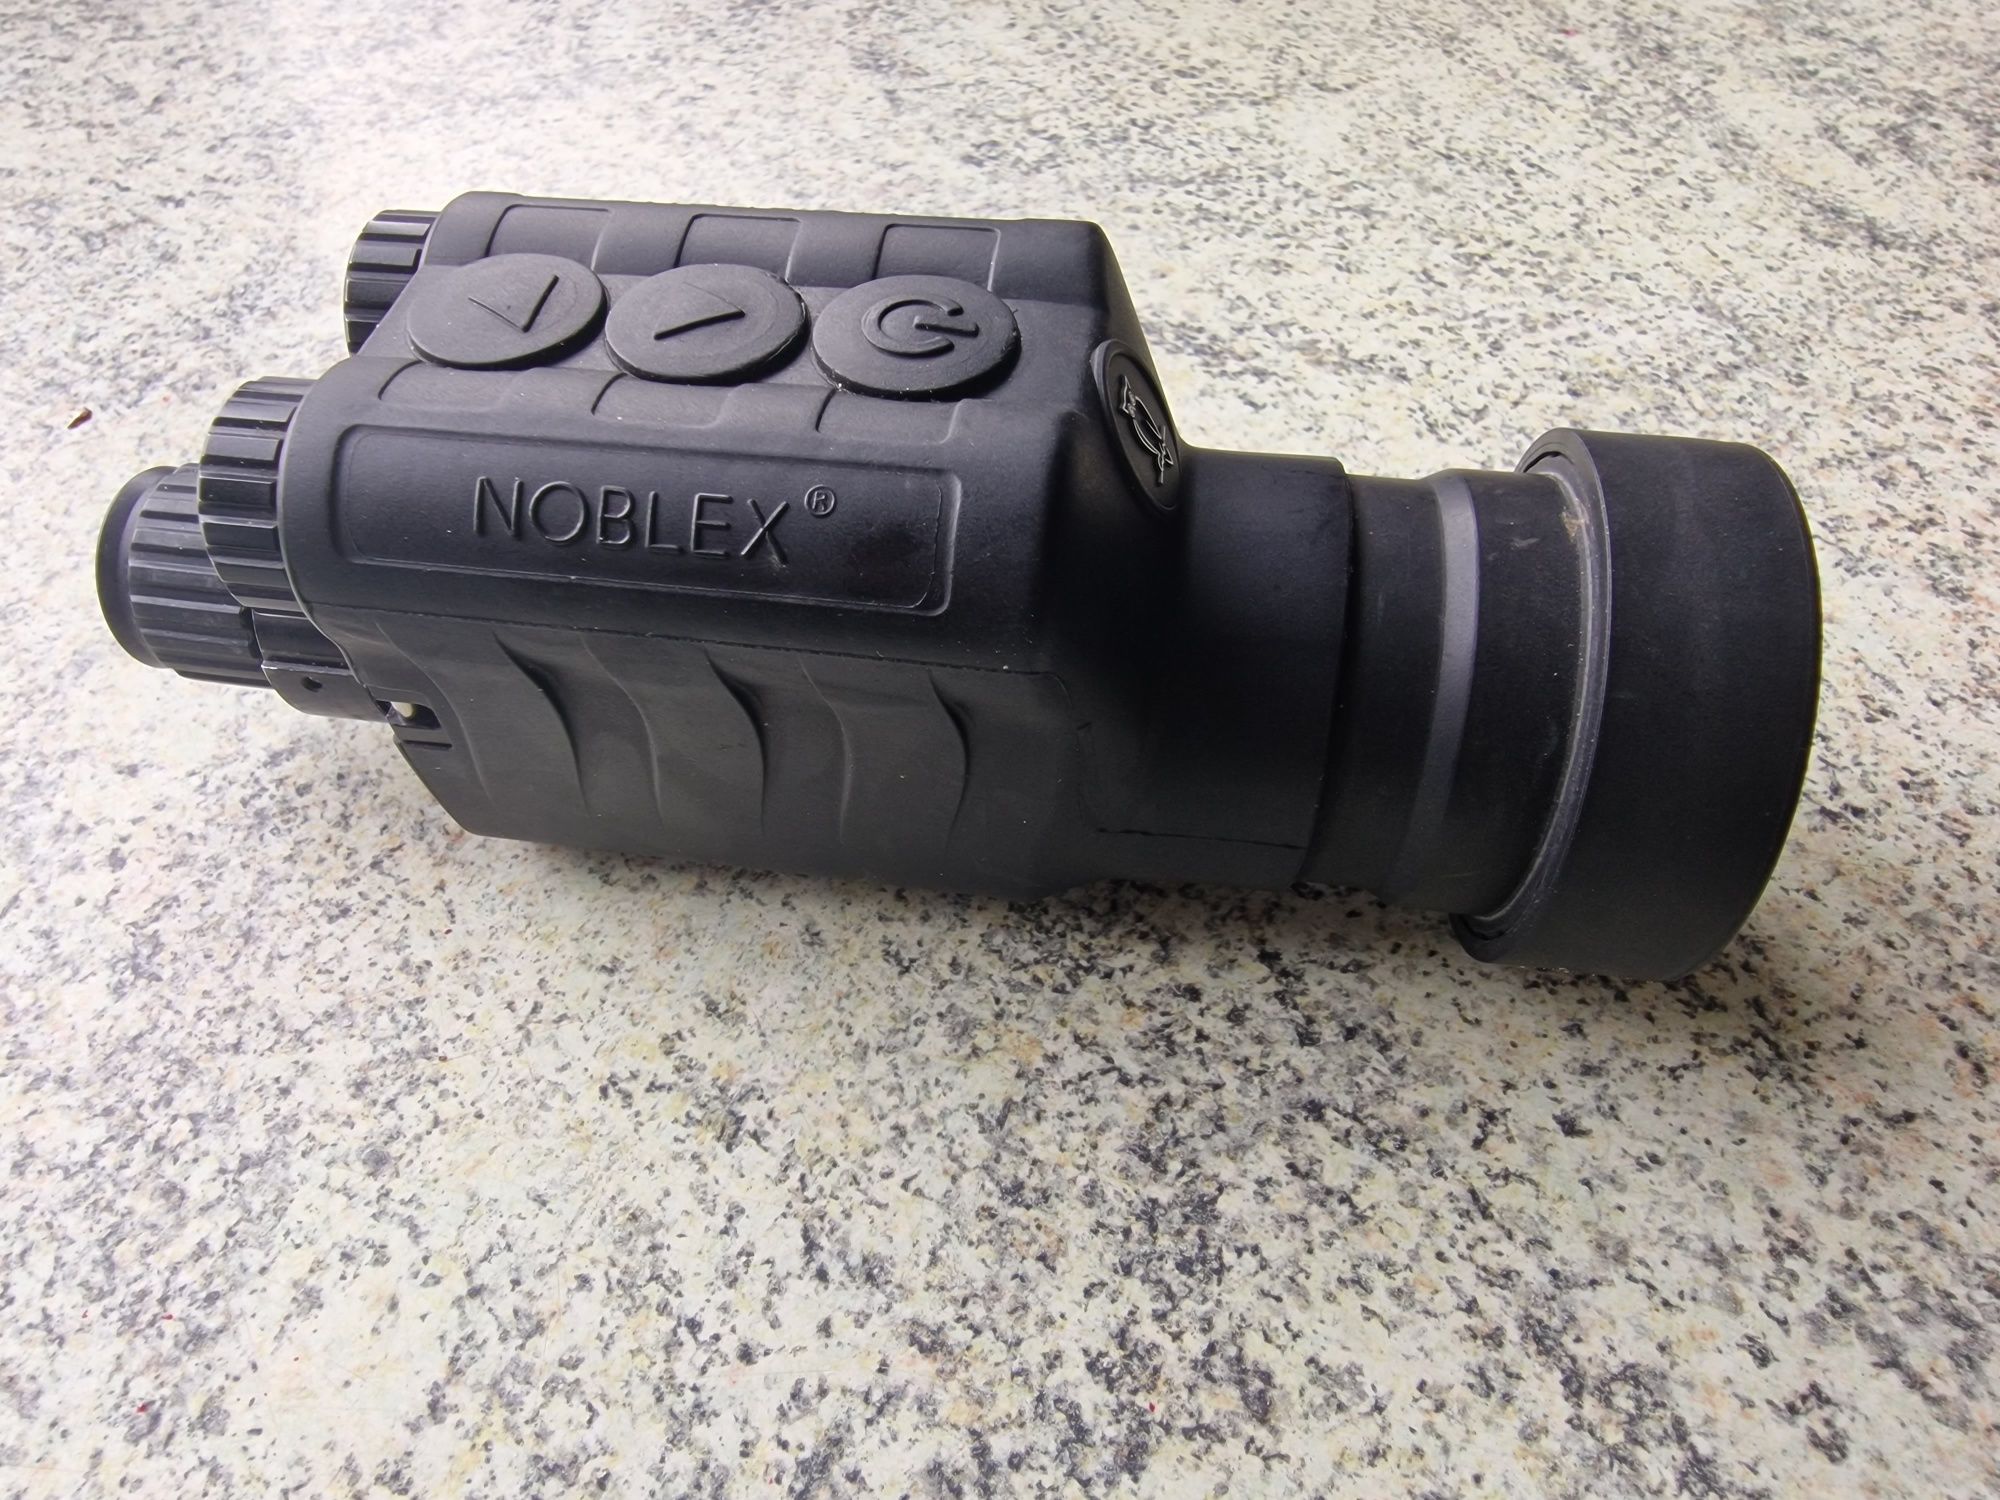 Noblex/Docter NW 100 F50-nakładka termowizyjna + montaż Recknagel